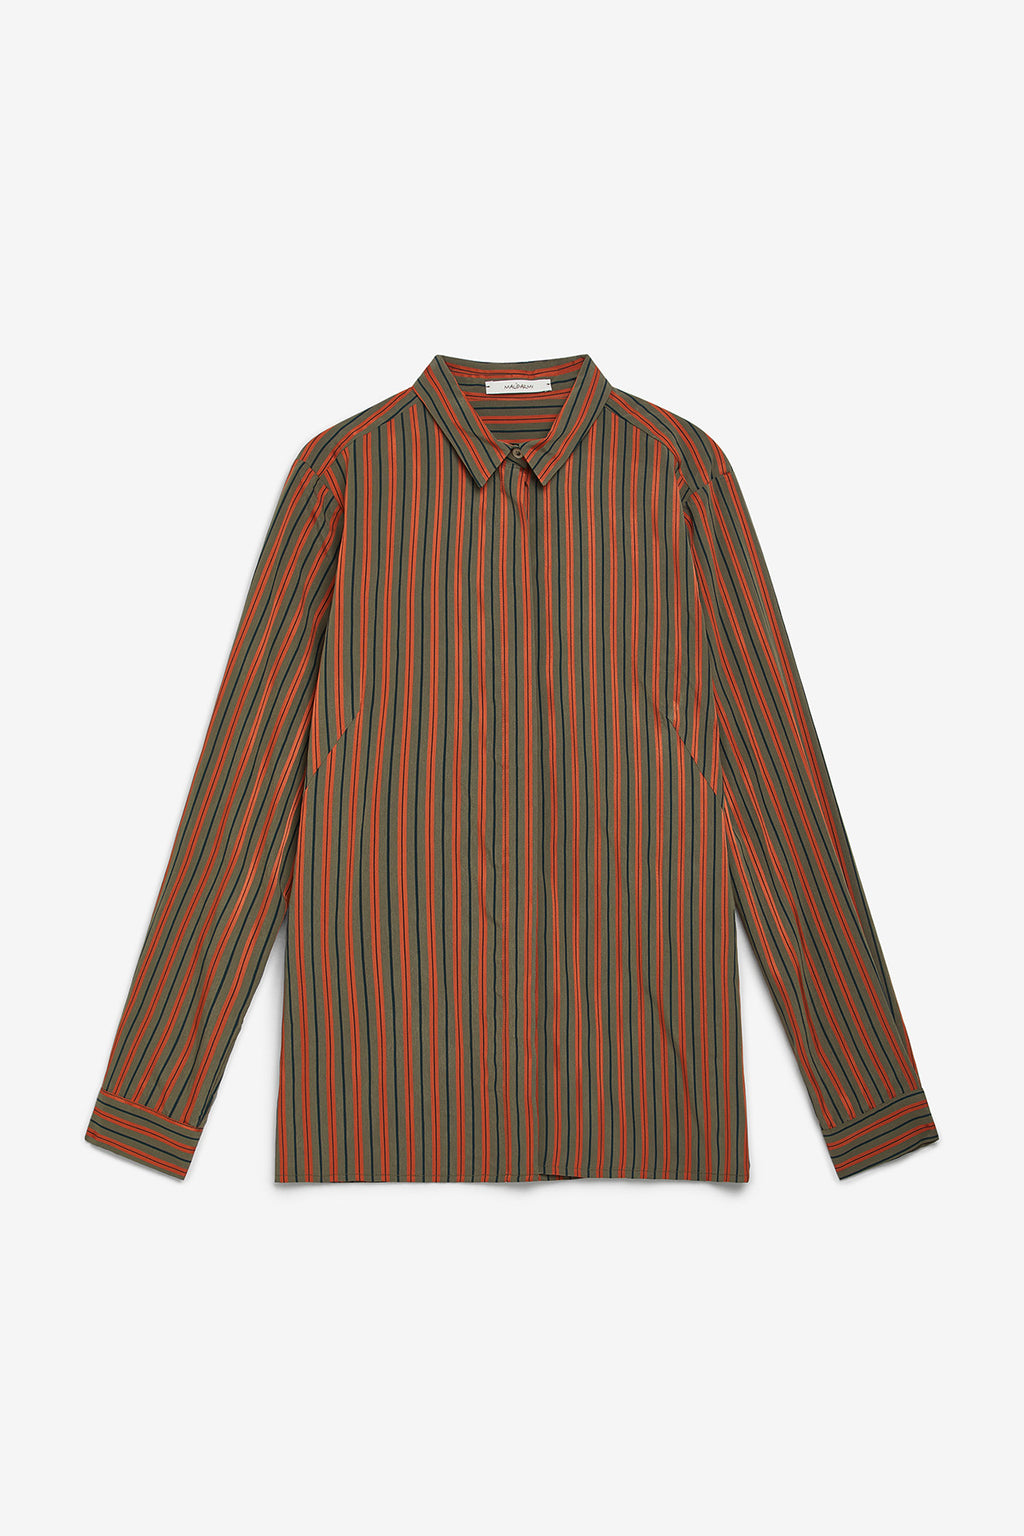 color bric muse stripes shirt